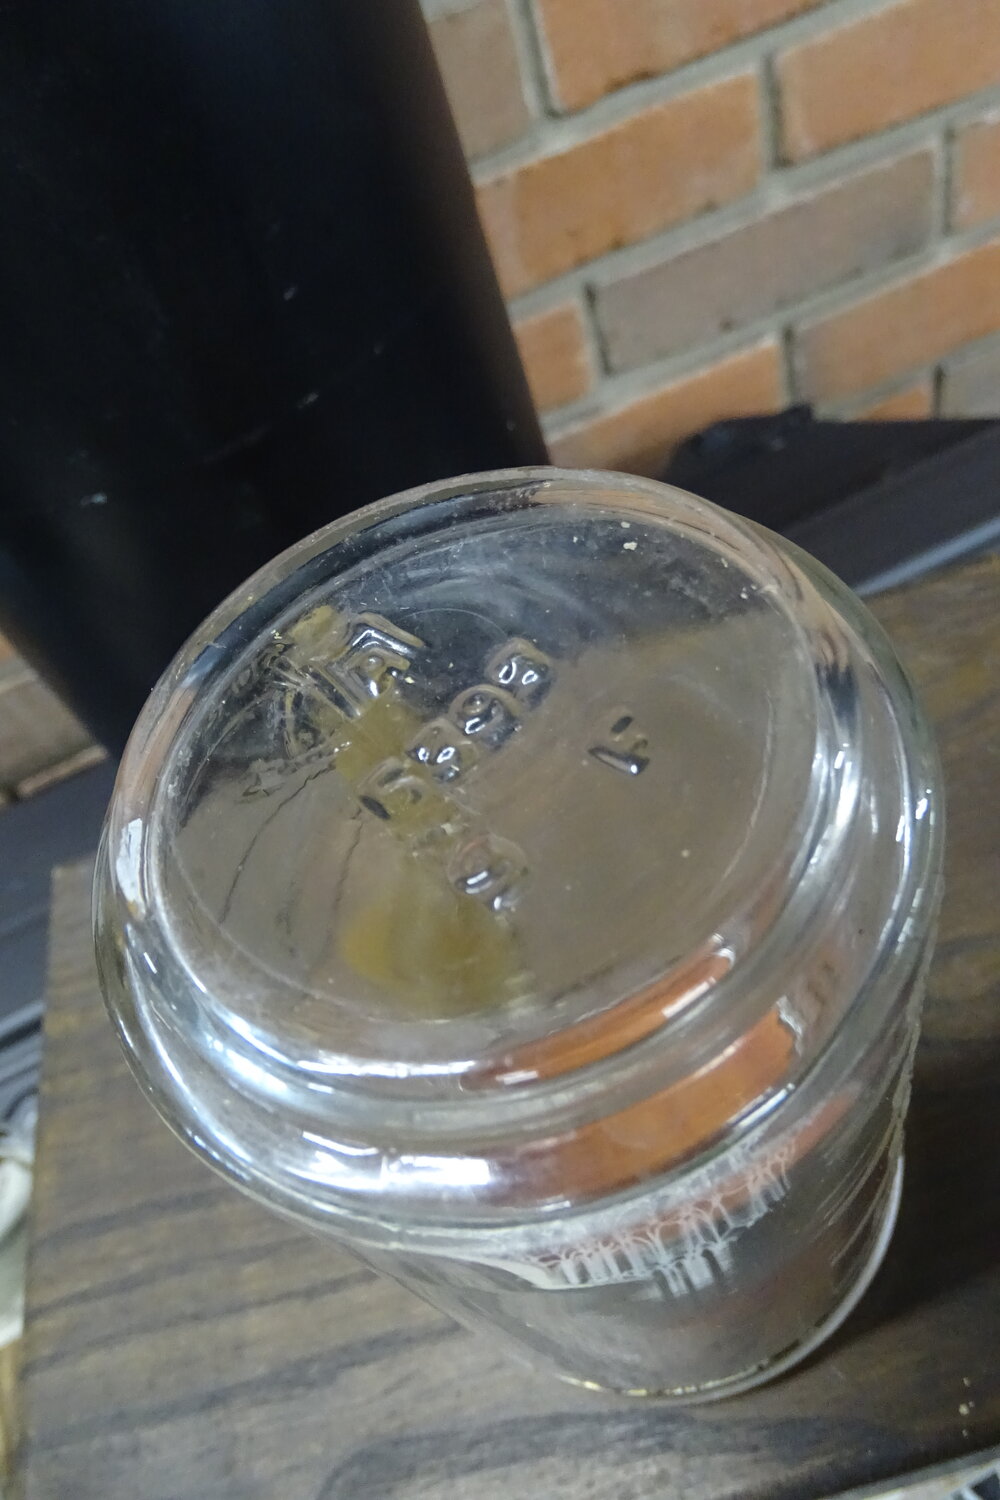 Vtg MCM 14oz Hand Food Nut Chopper Glass Jar Teal Wood Handle Painted Top